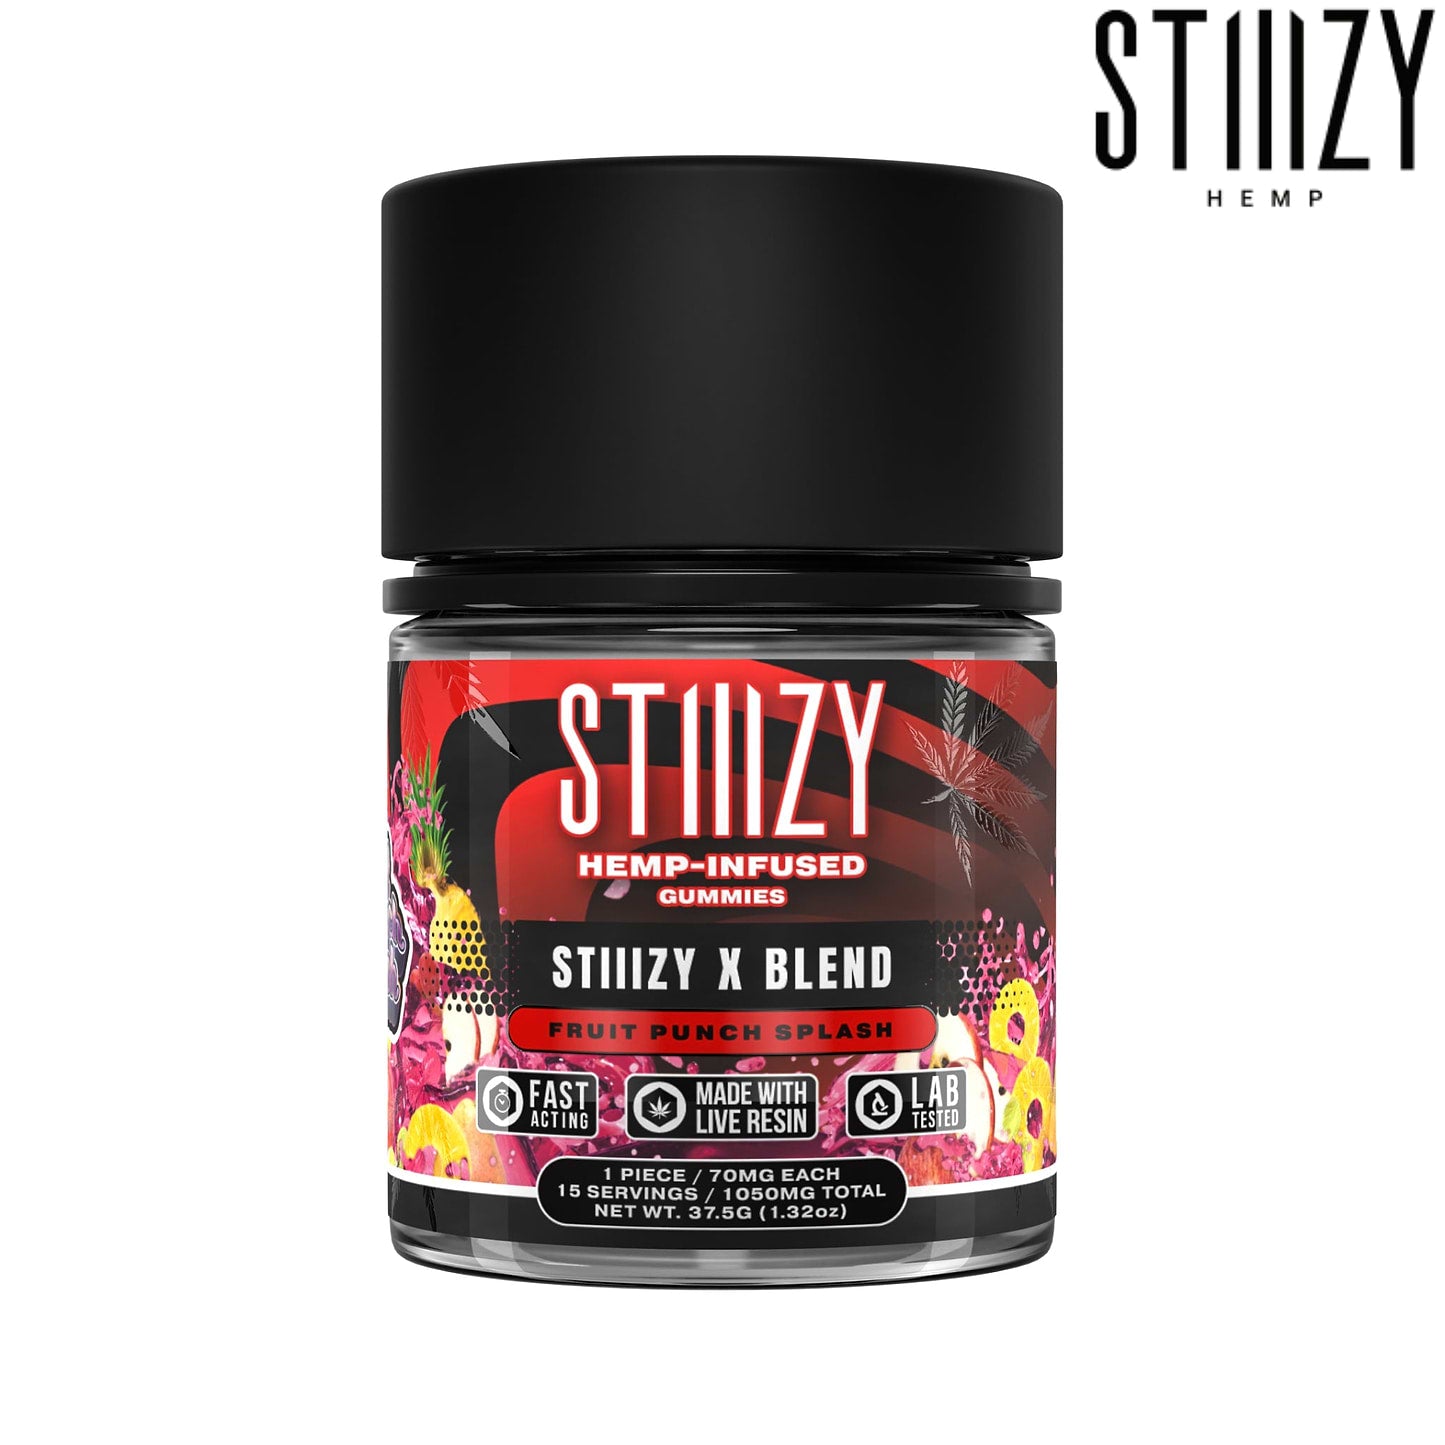 STIIIZY - Gummies (X BLEND) - Gummies & Edibles (1050mg x 10) - MK Distro